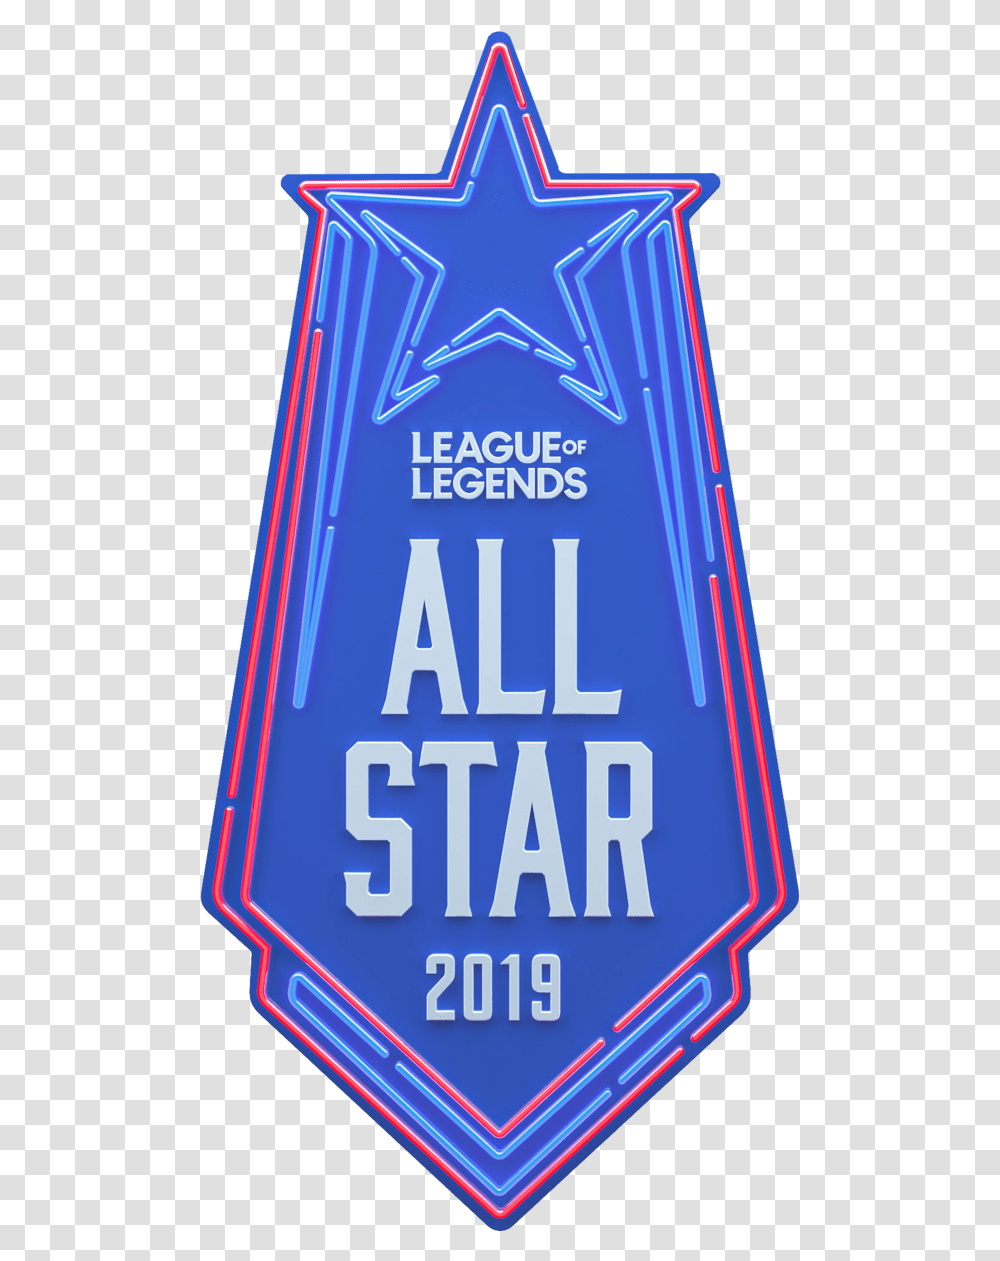 All Star 2019 Las Vegas Leaguepedia League Of Legends All Star 2019 Lol, Text, Bottle, Beverage, Drink Transparent Png